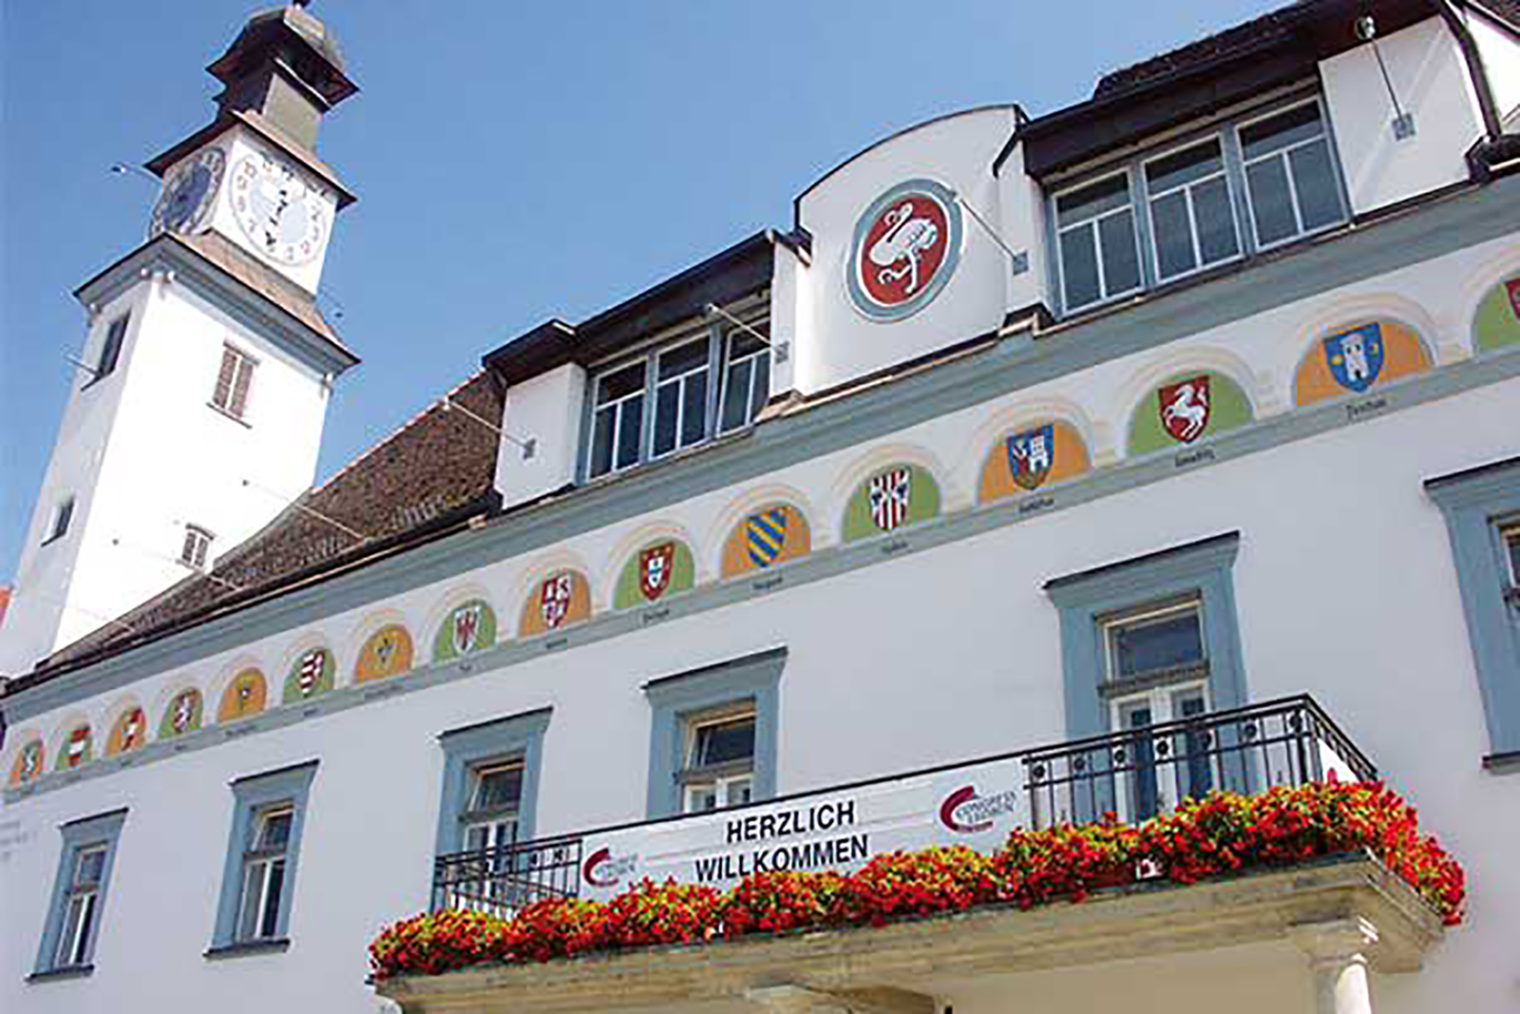 Altes Rathaus (Congress Leoben) mit Stadtwappen an der Fassade